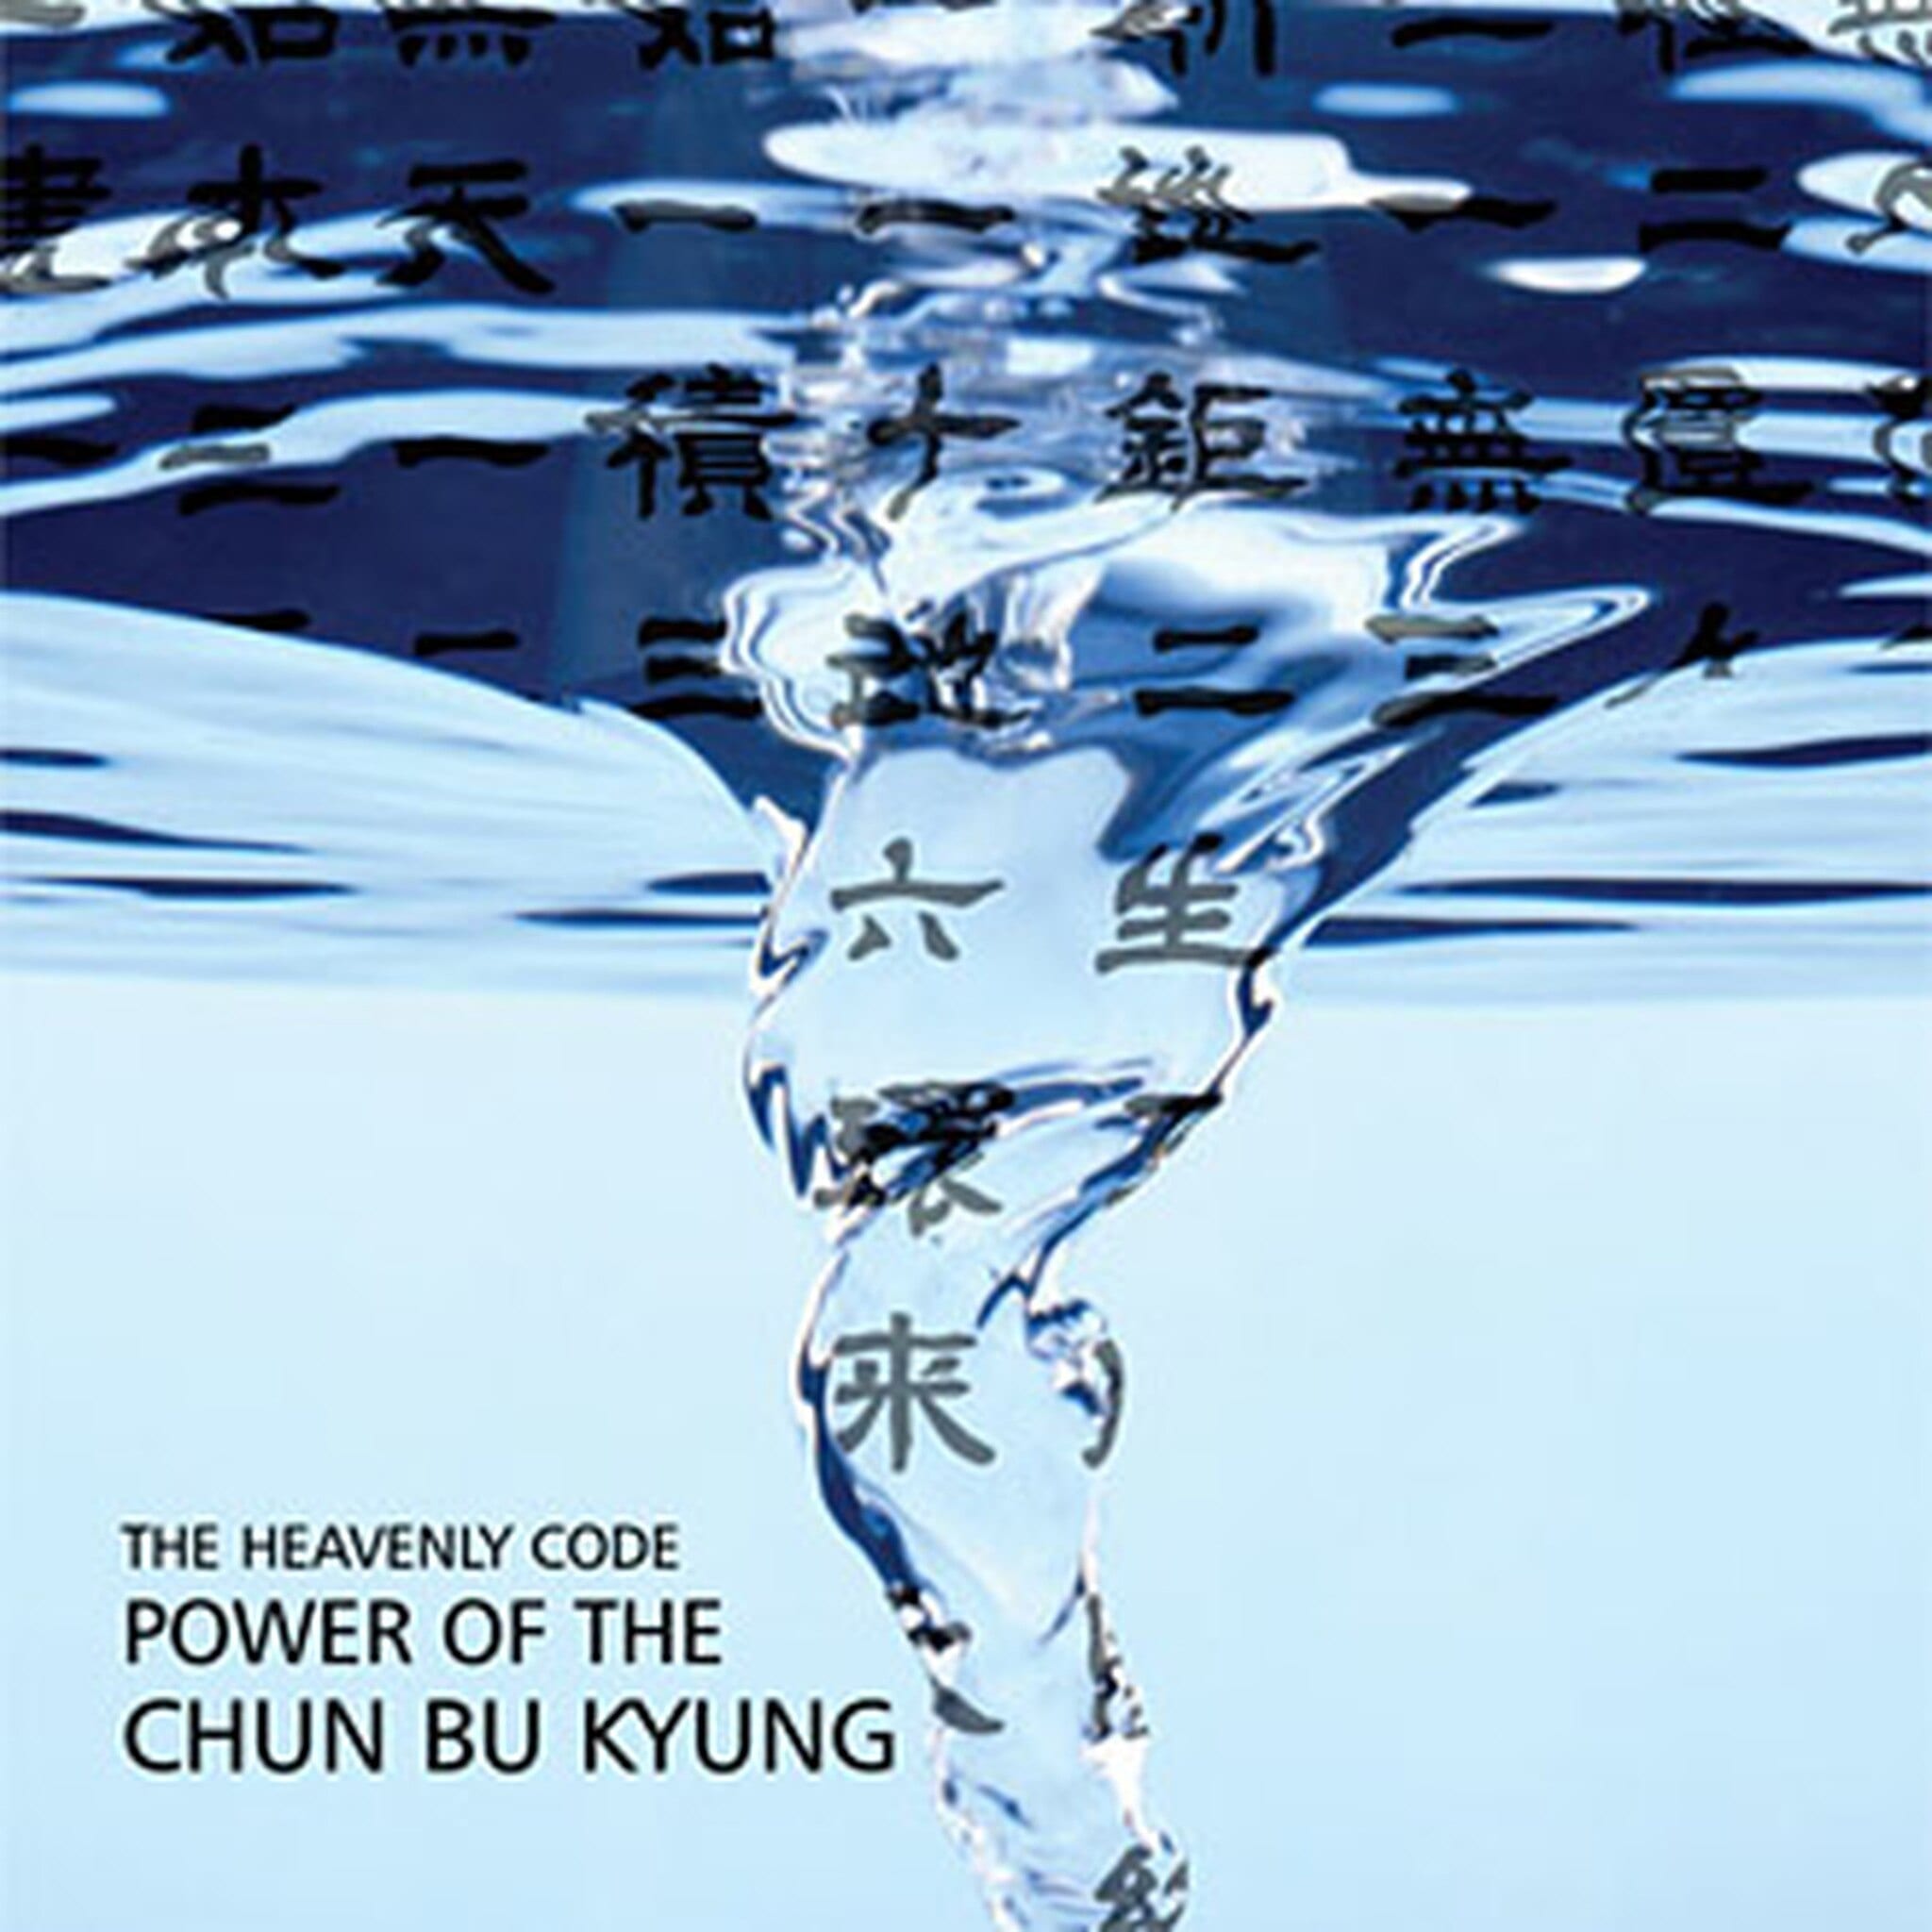 Power of the Chun Bu Kyung